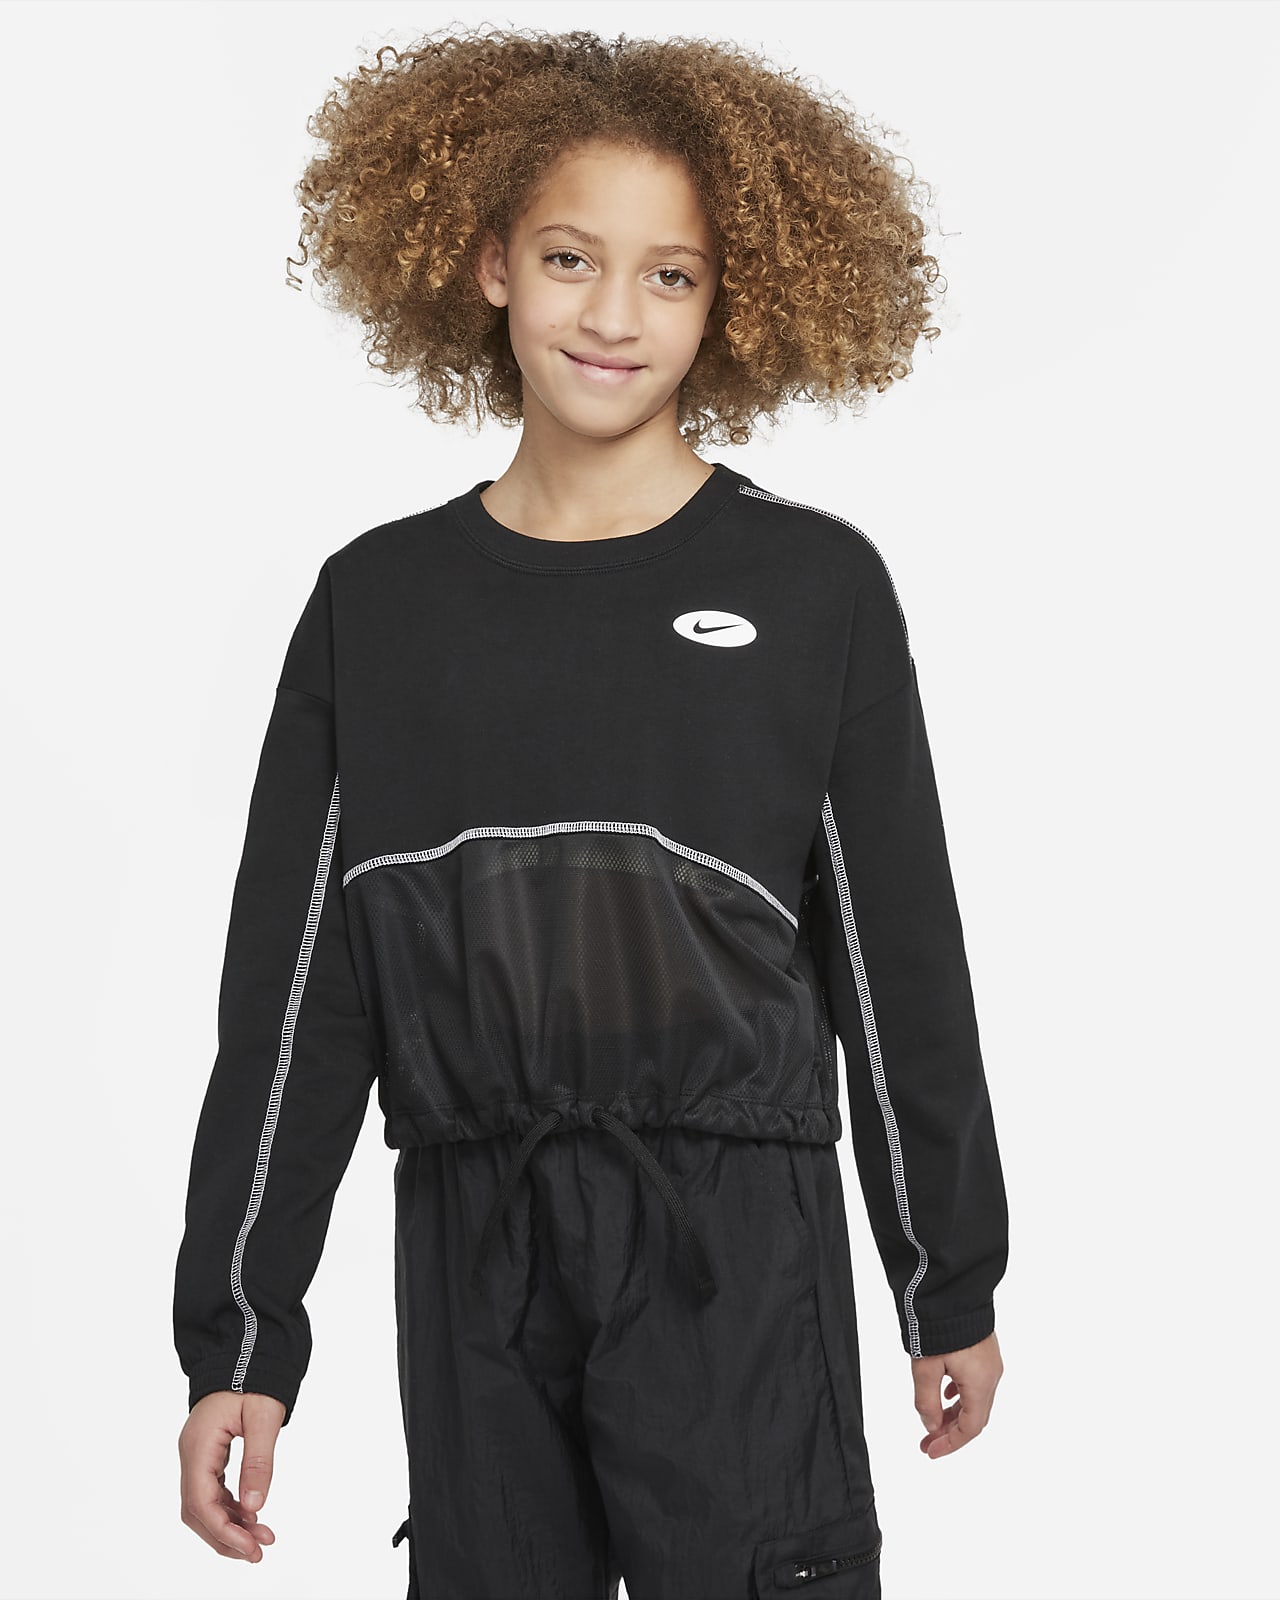 Nike Sportswear Icon Clash Older Kids' (Girls') Top